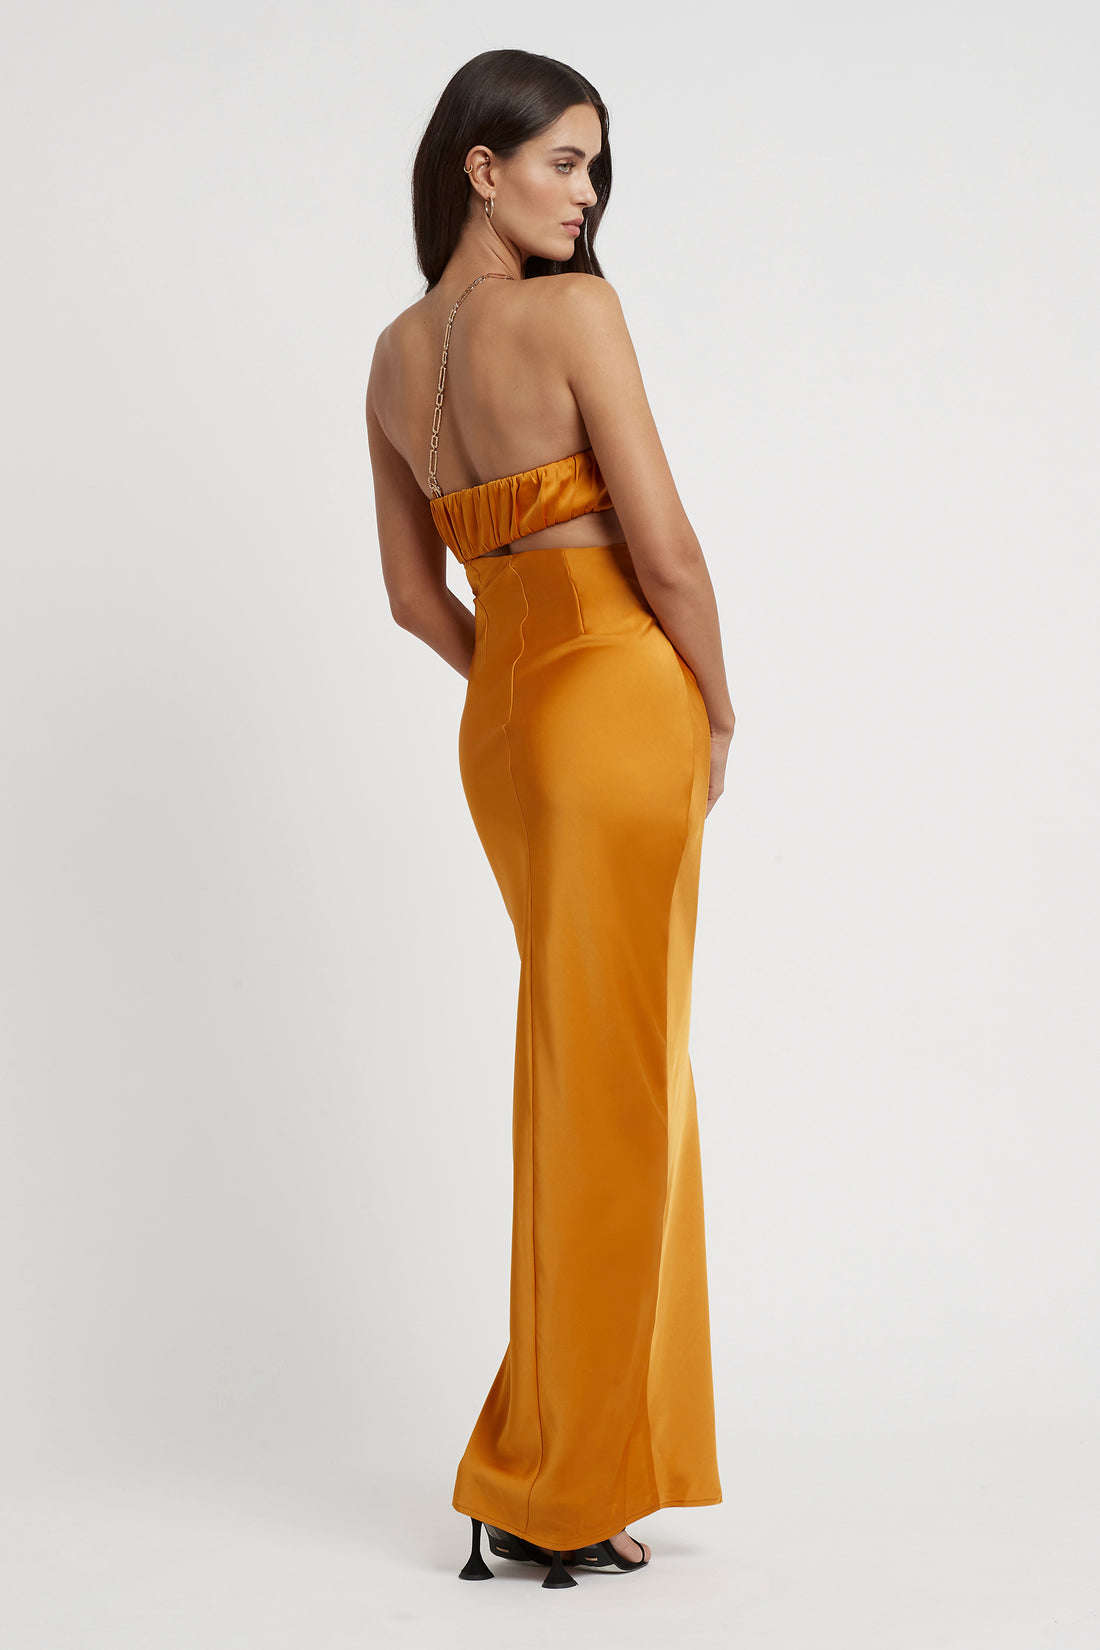 Lexi LEXI Talia Dress (Honey) - RRP $299 - rent-lexi-talia-dress-honey---rrp-9-hire-dress-for-a-night--30826682.jpg